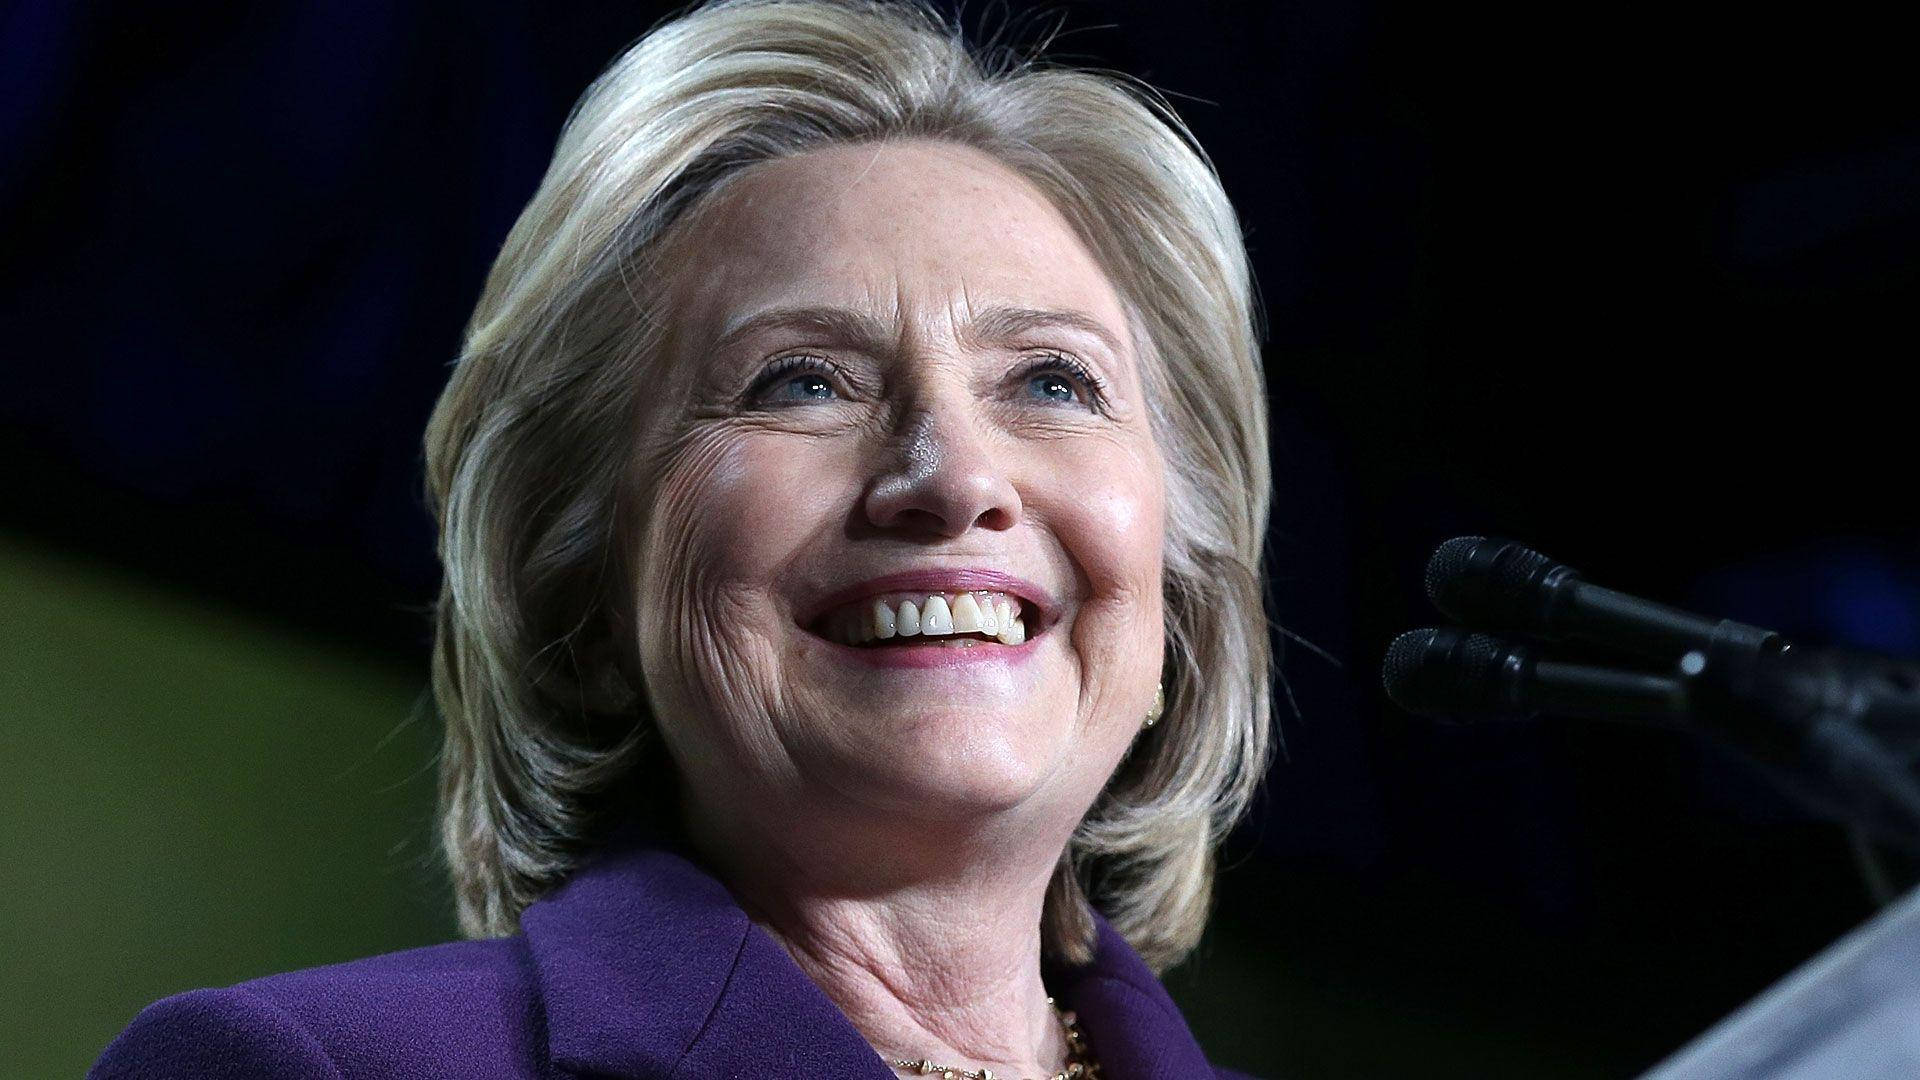 Hillary Clinton In A Cheerful Mood